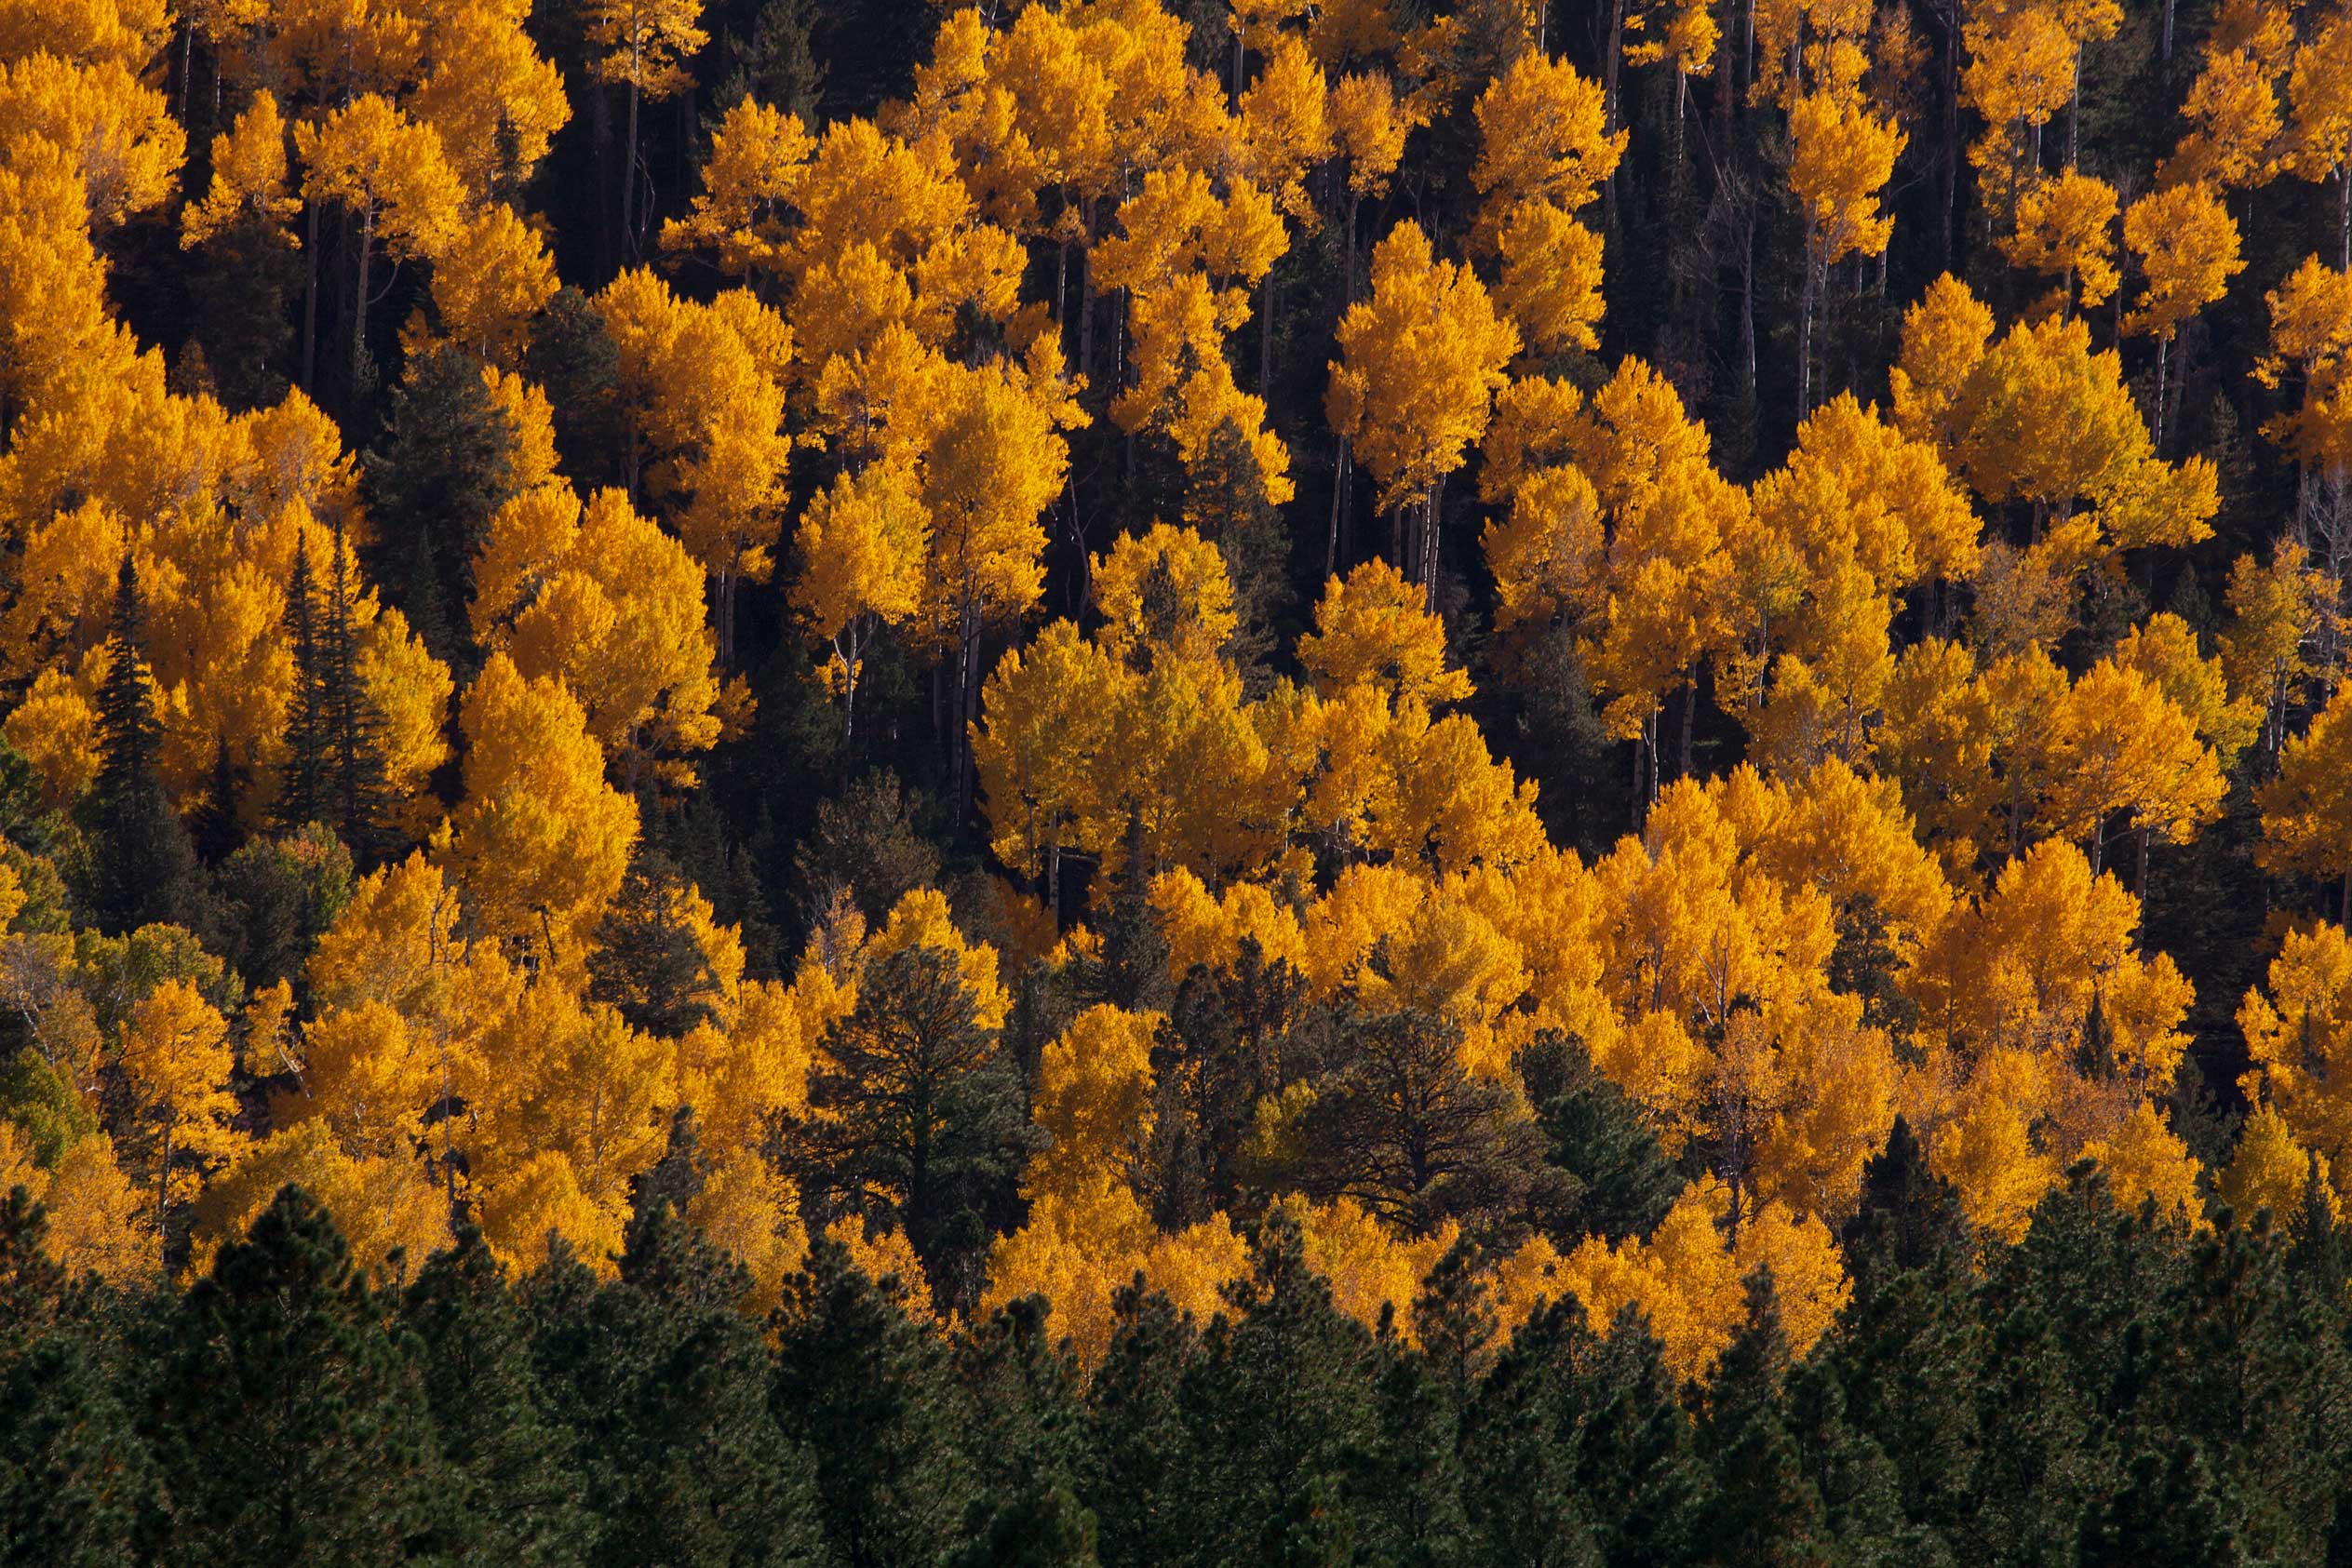 Aspen trees in autumn in the San Francisco Peaks of northern Arizona